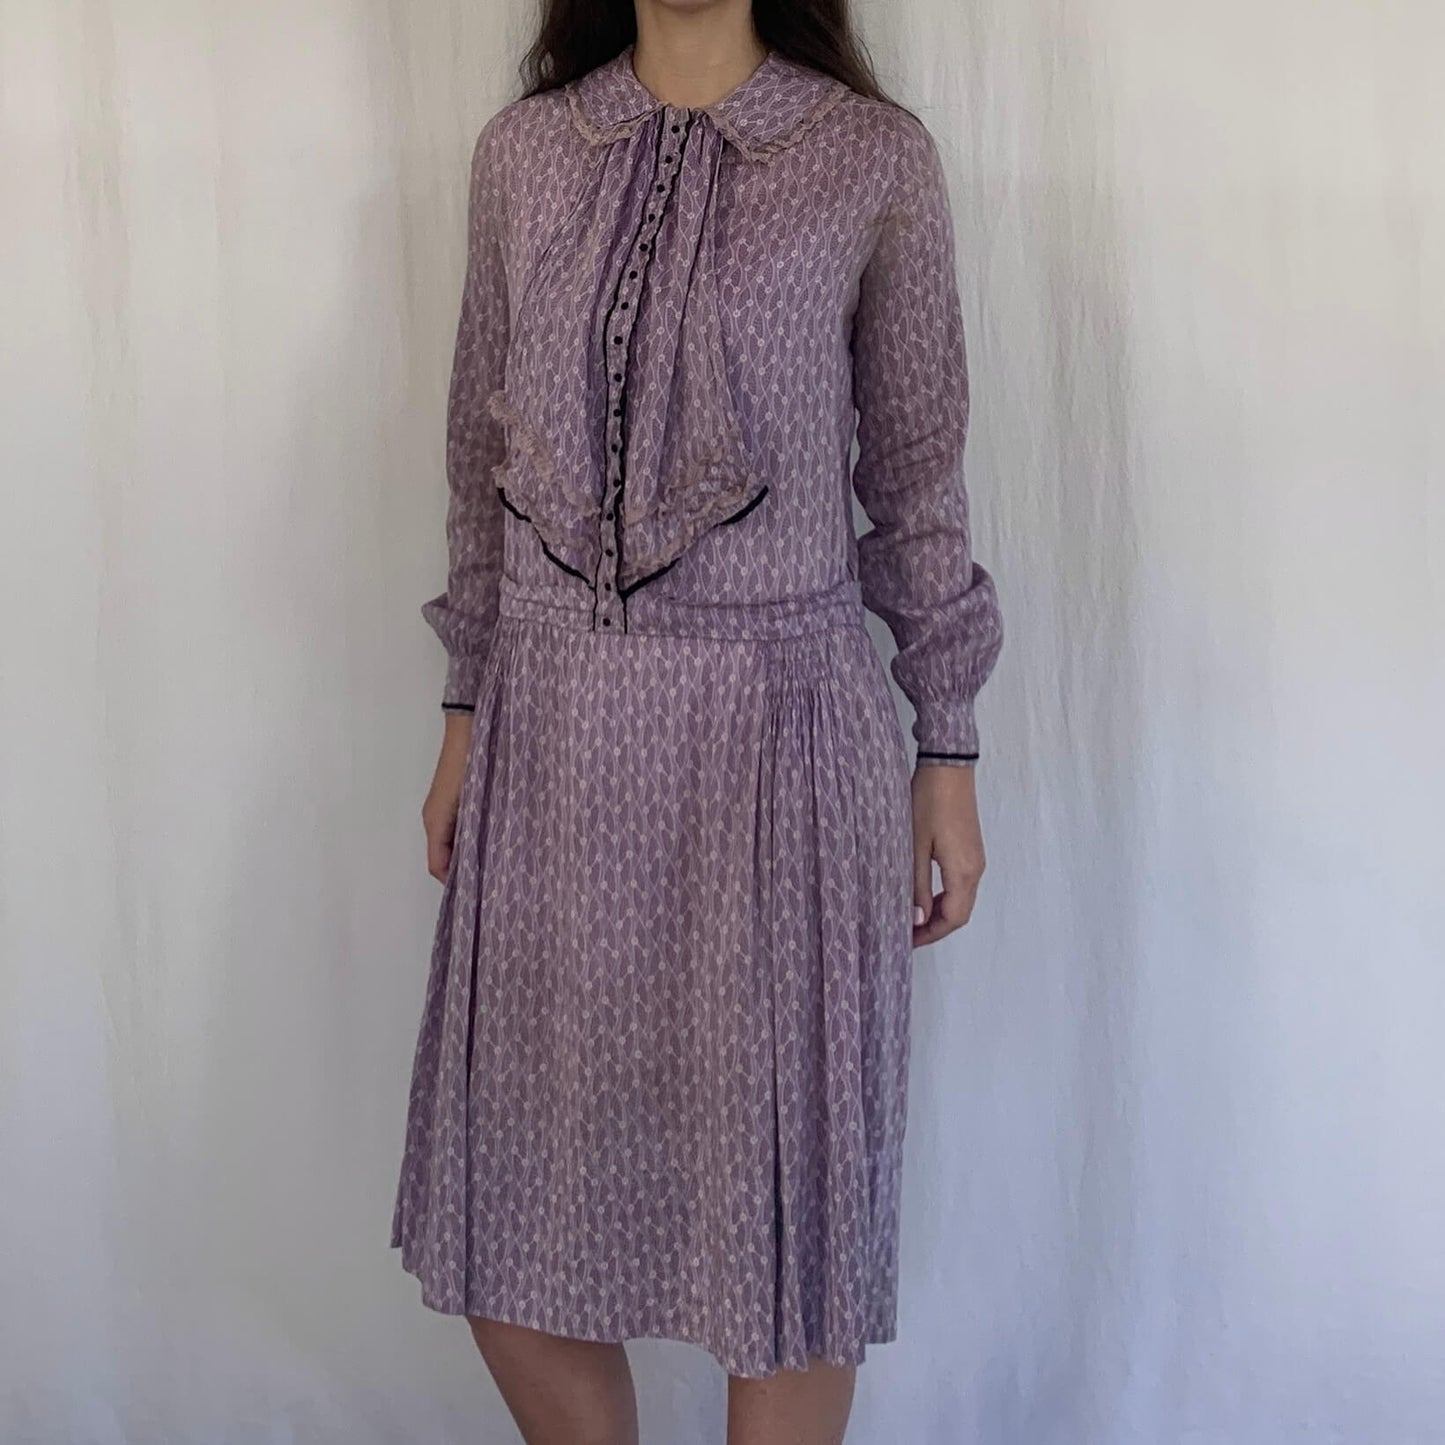 1920s drop waist dress with jabot collar in purple silk